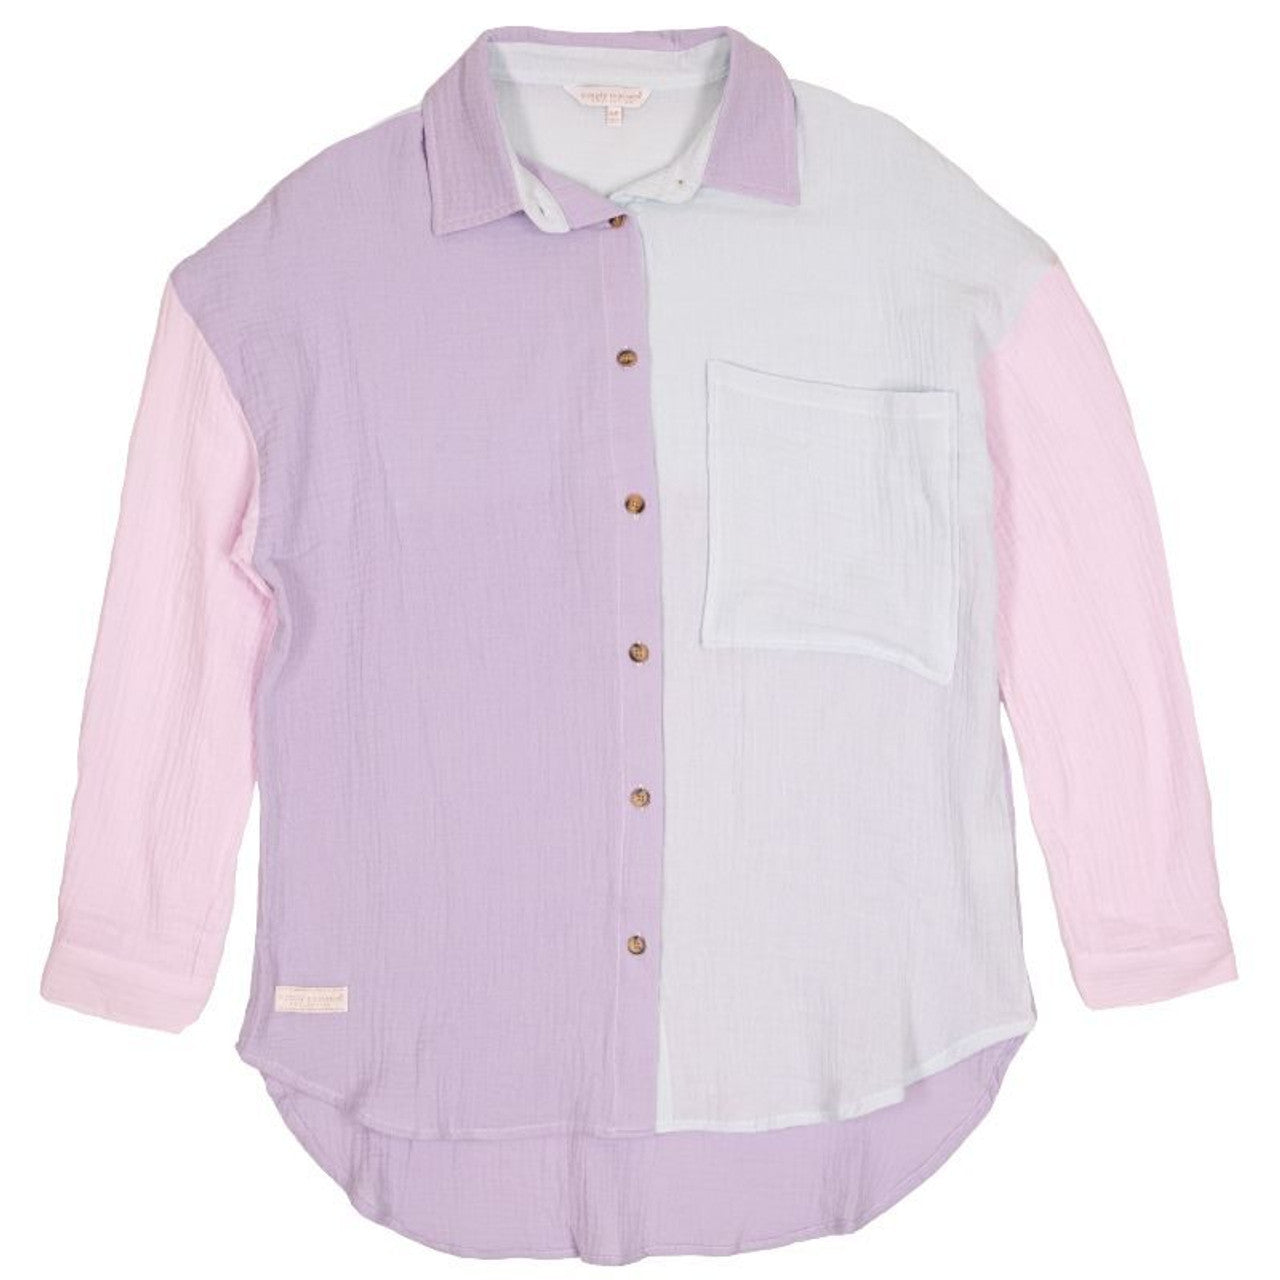 Colorblock Button Up Shirt